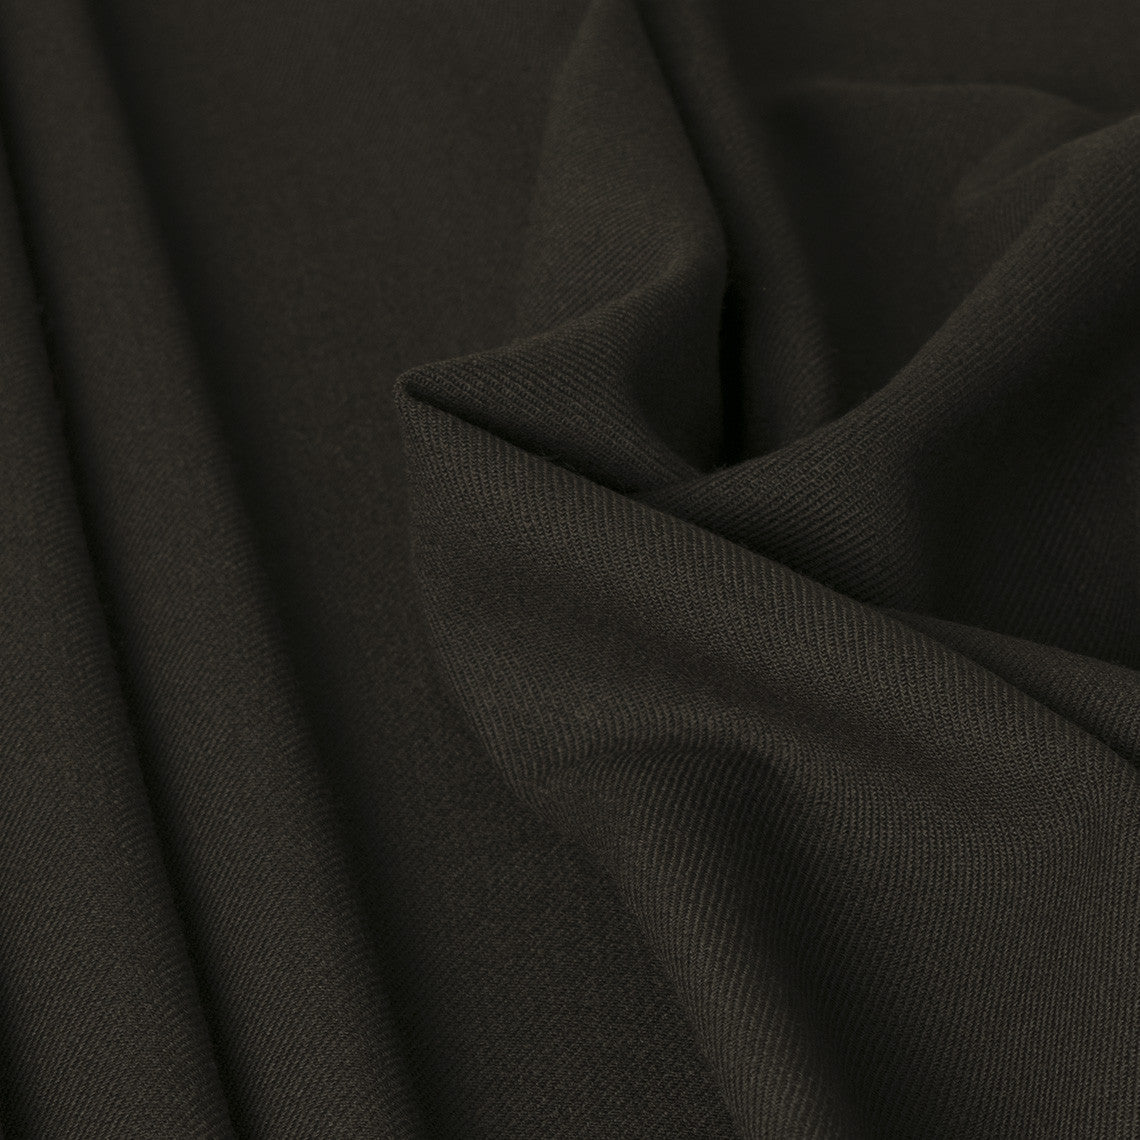 Chocolate Brown Stretch Suiting Fabric 2346 - Fabrics4Fashion